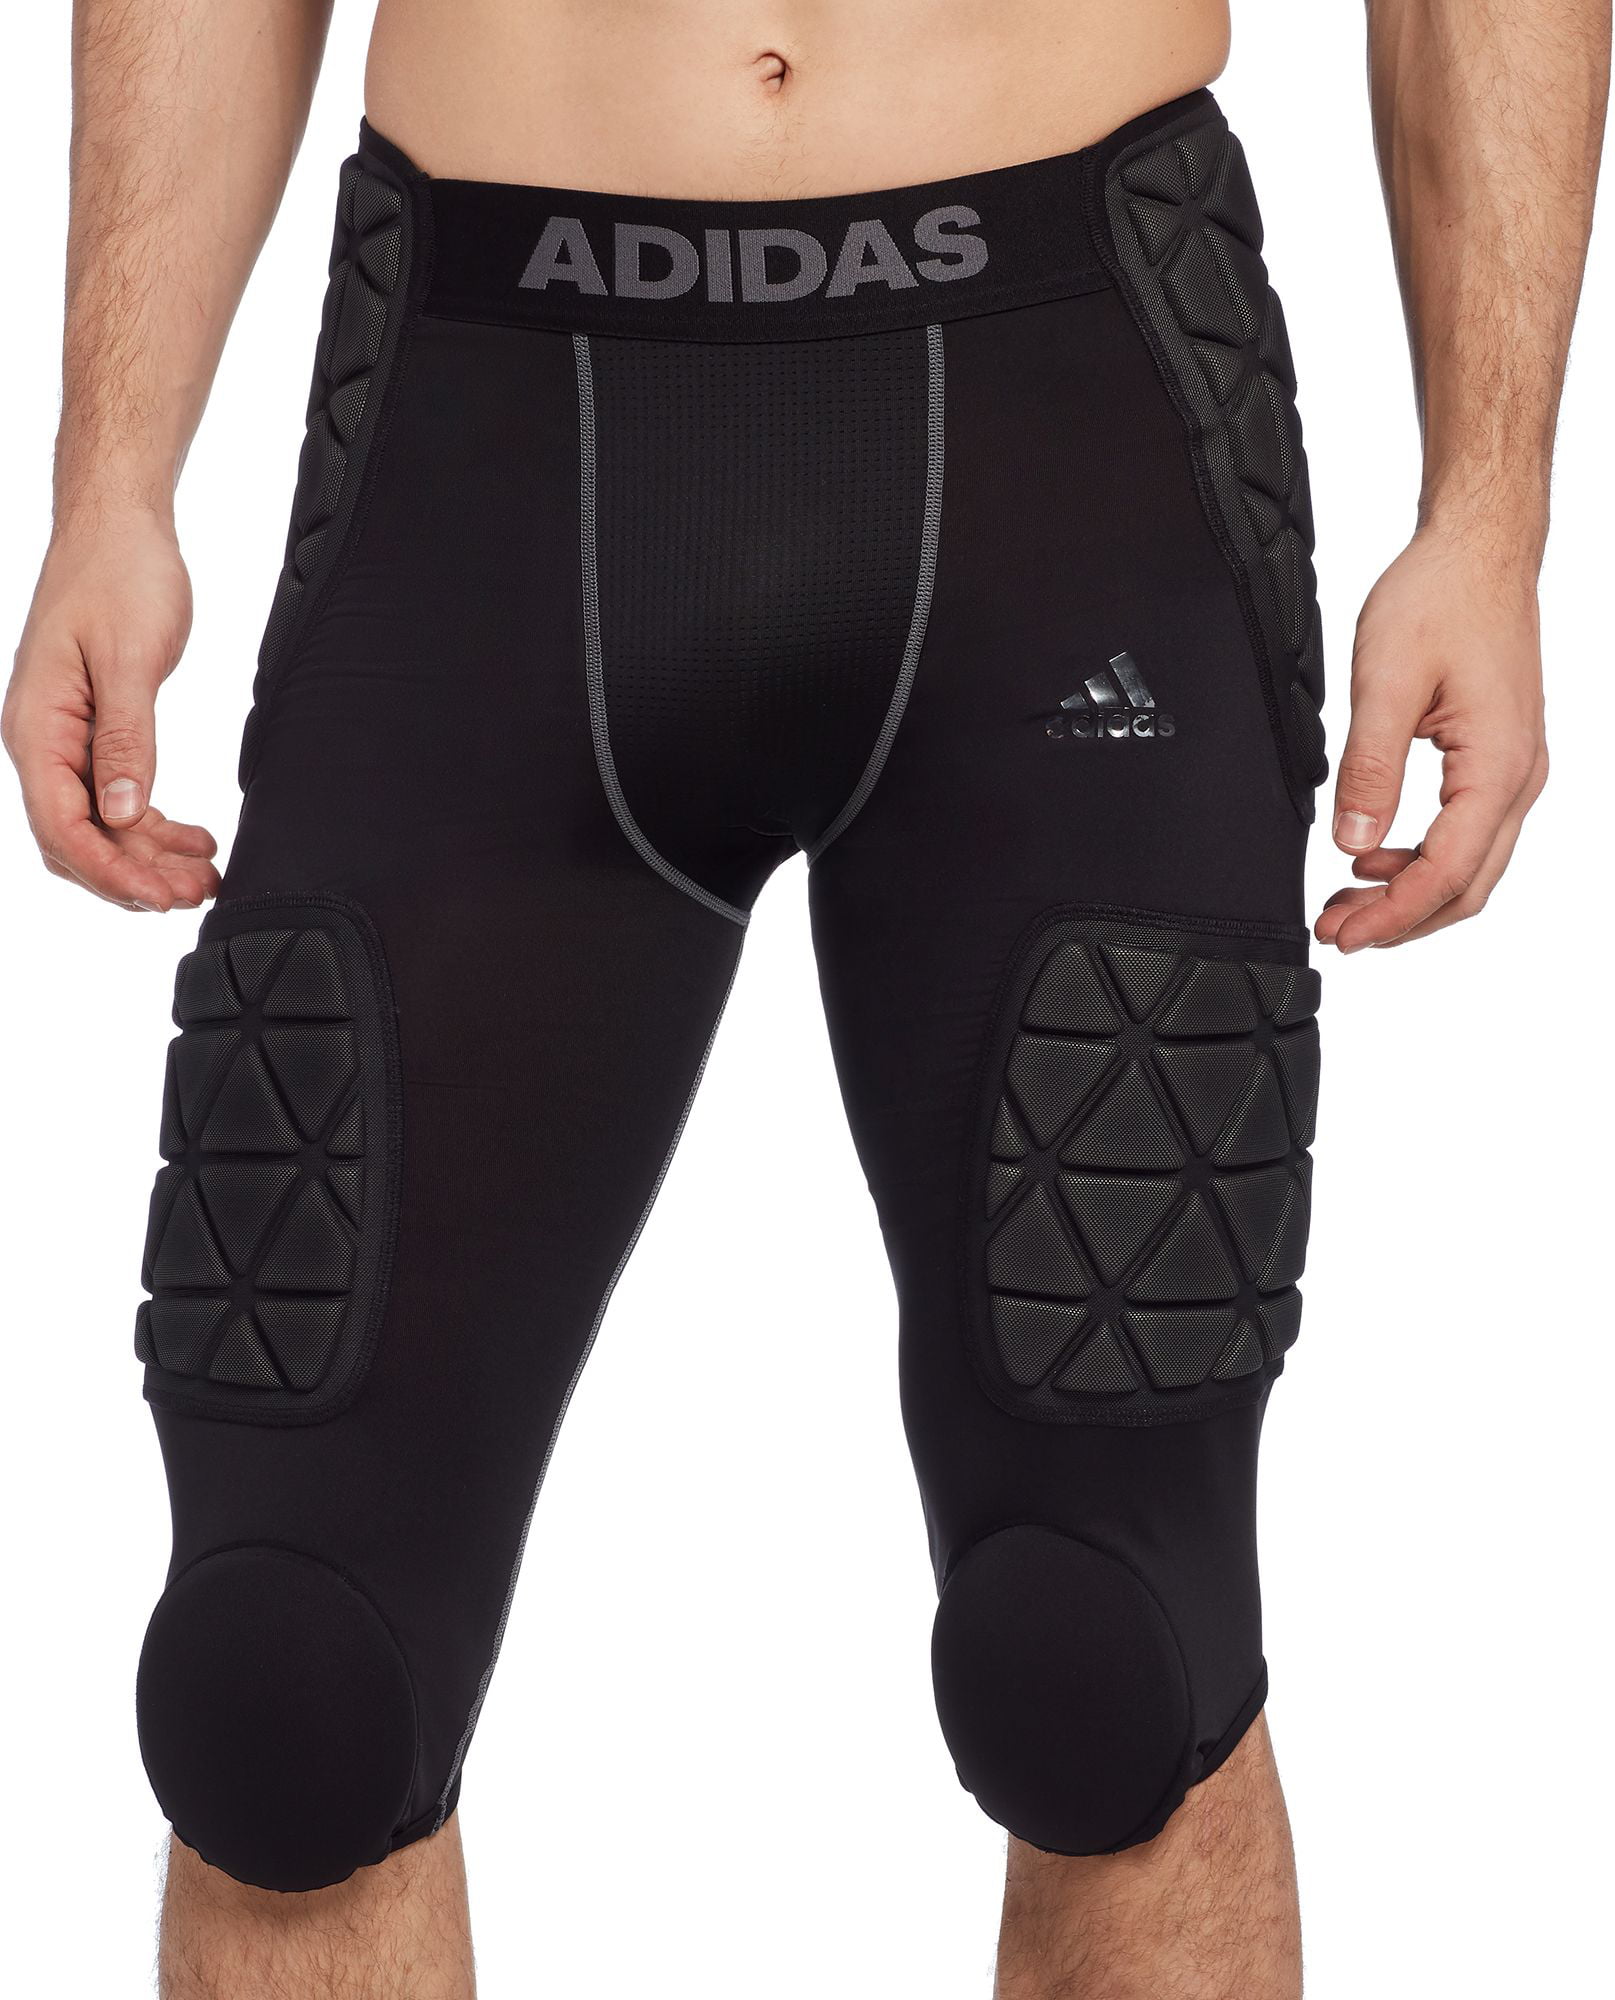 adidas football girdle with knee pads